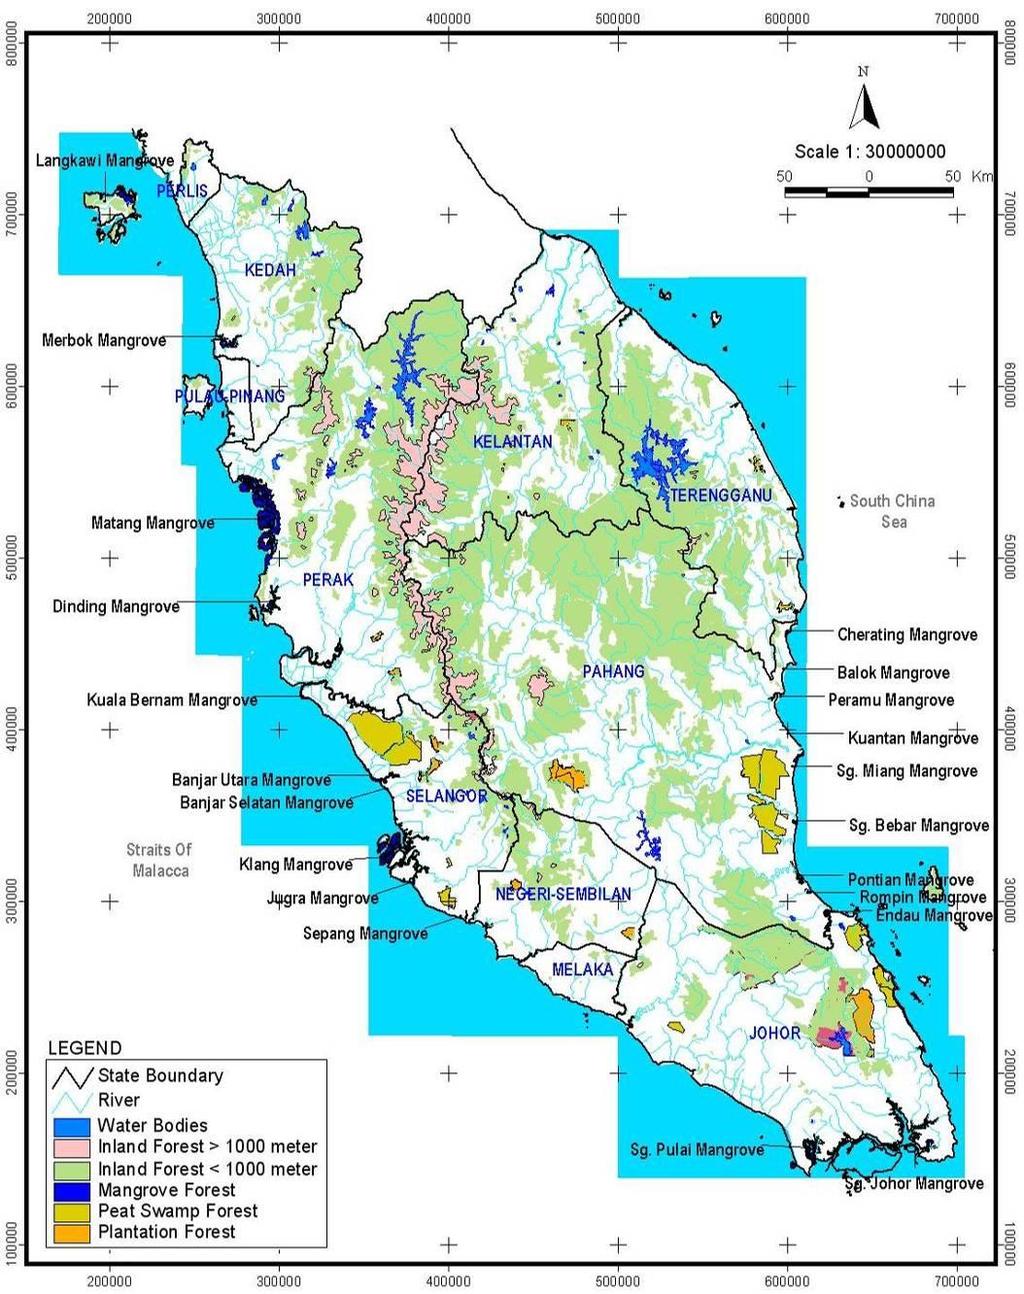 Distribution of PSF in Malaysia: (i) Pahang (200,000 ha), (ii)